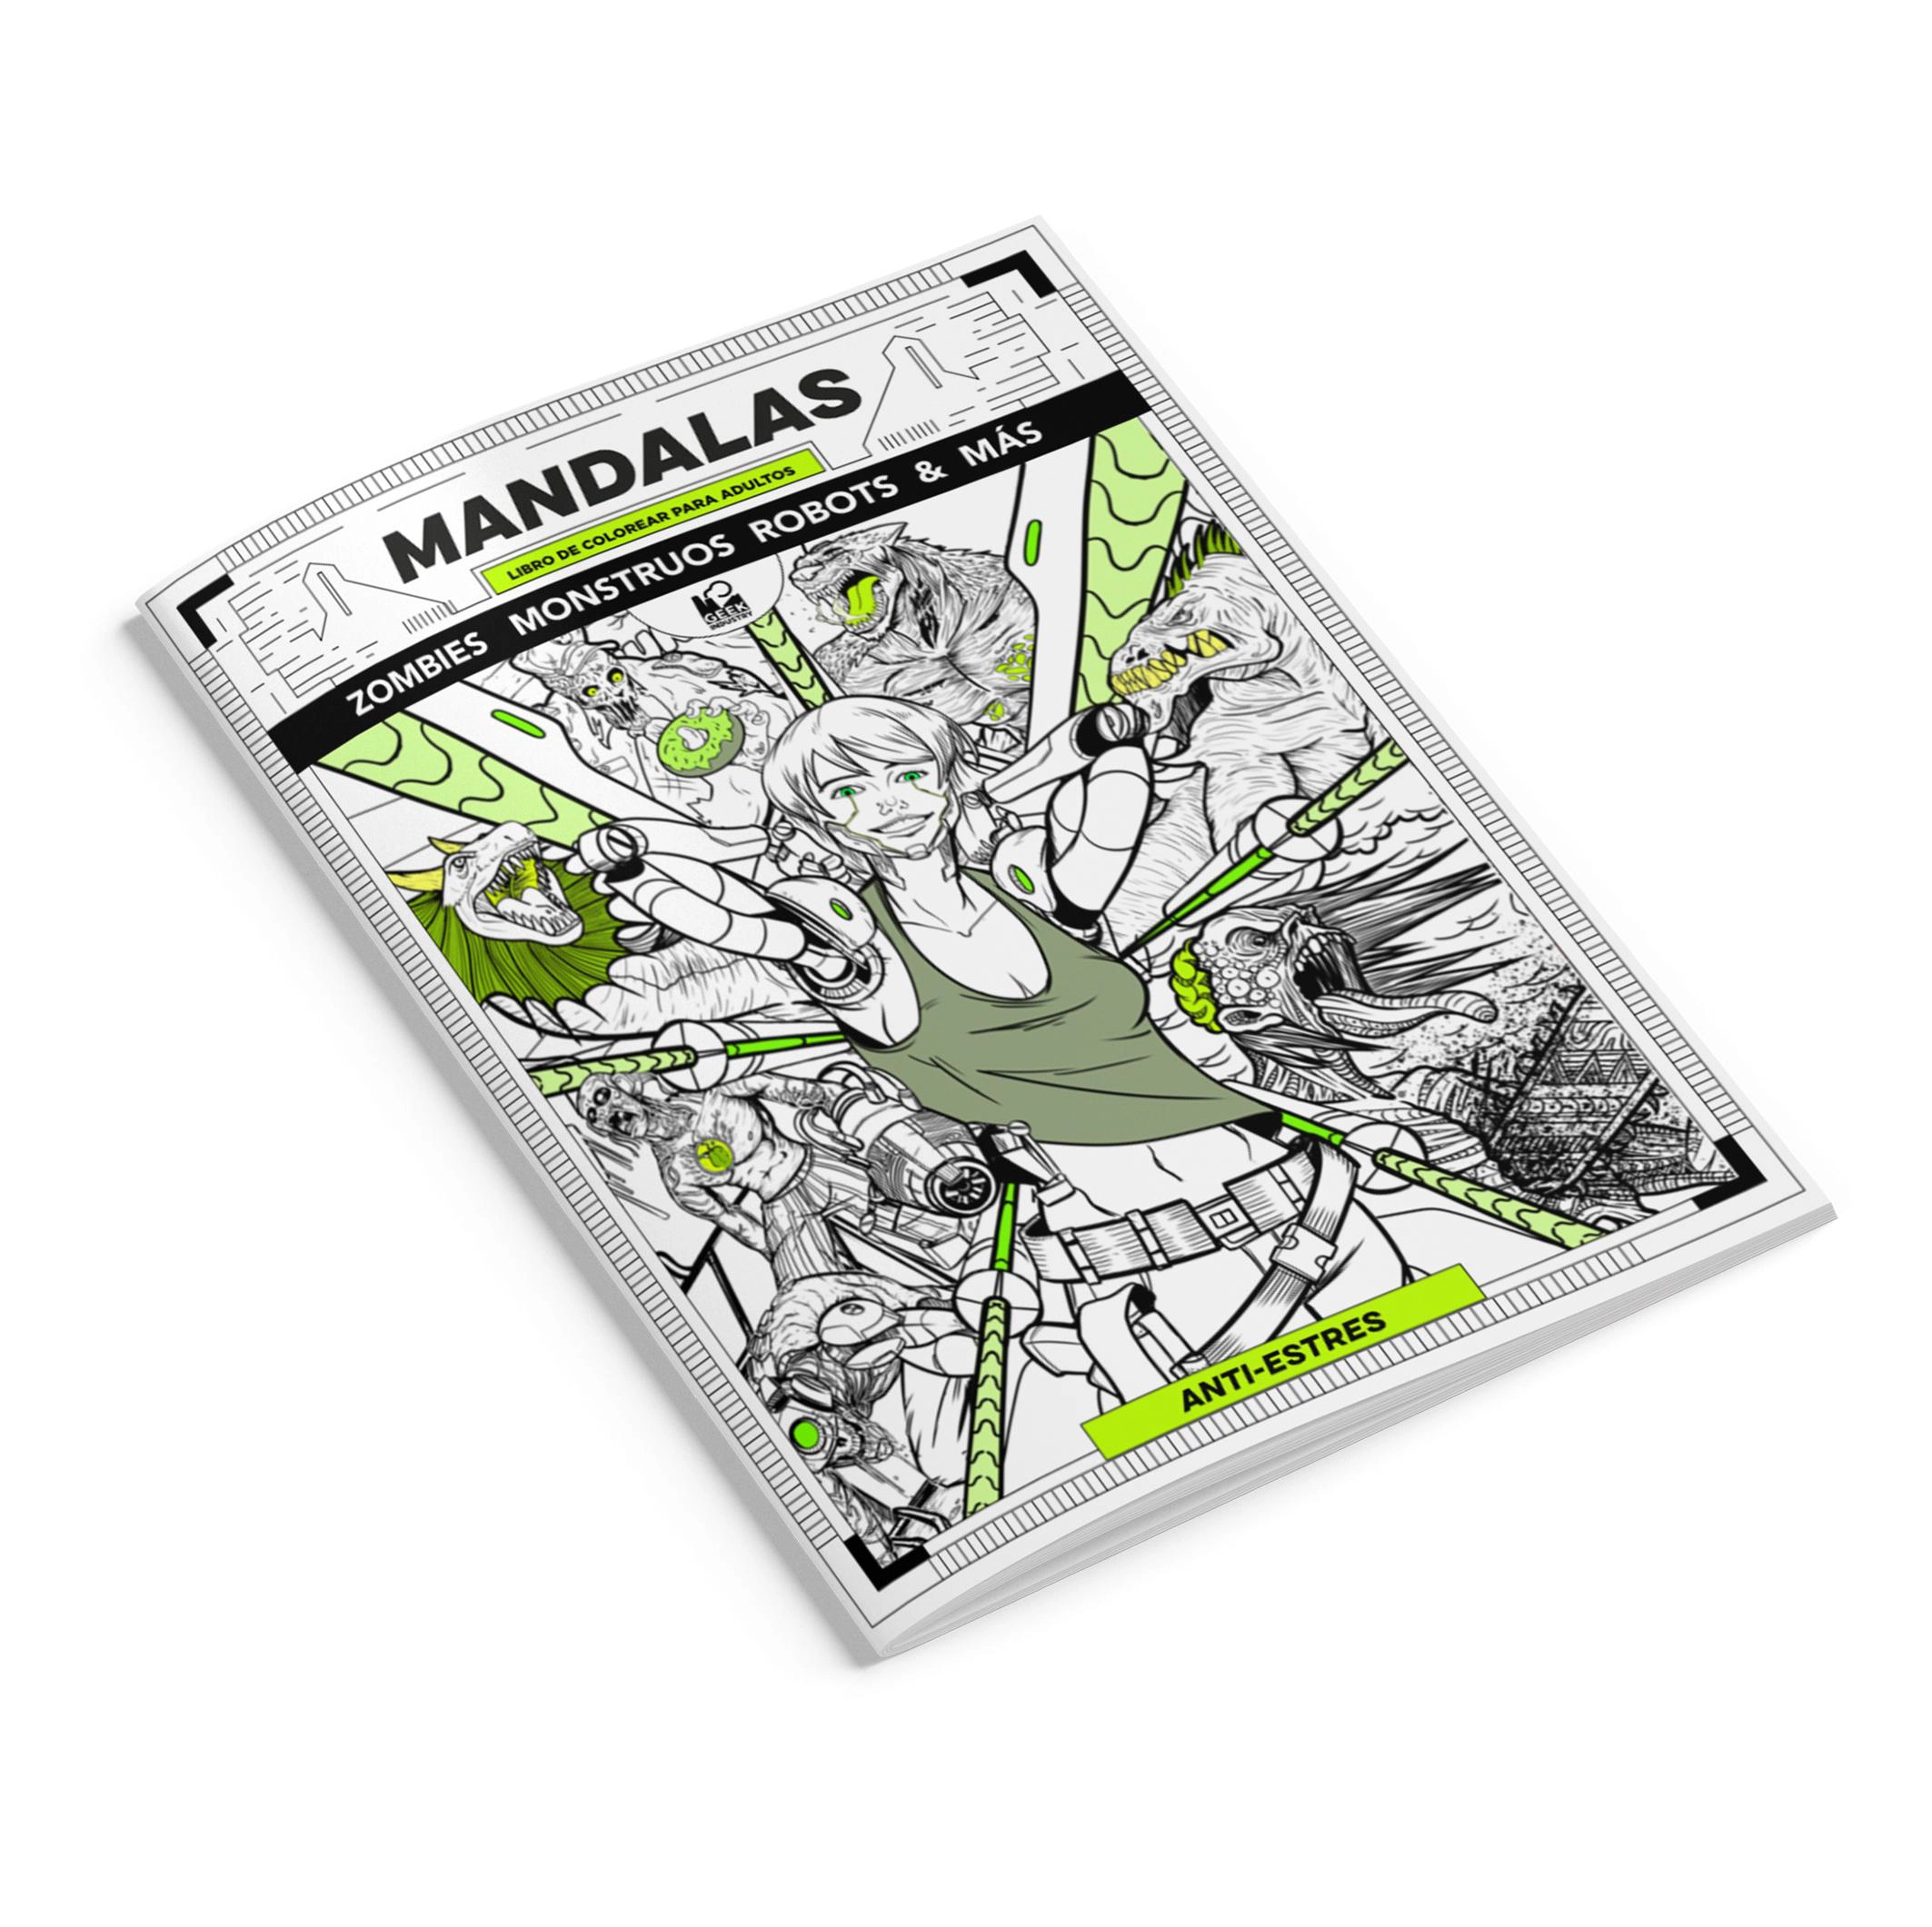 Geek Industry - Libro Para Colorear Para Adultos - Mandala, Zombies,  Monstruos, Robots & M?s